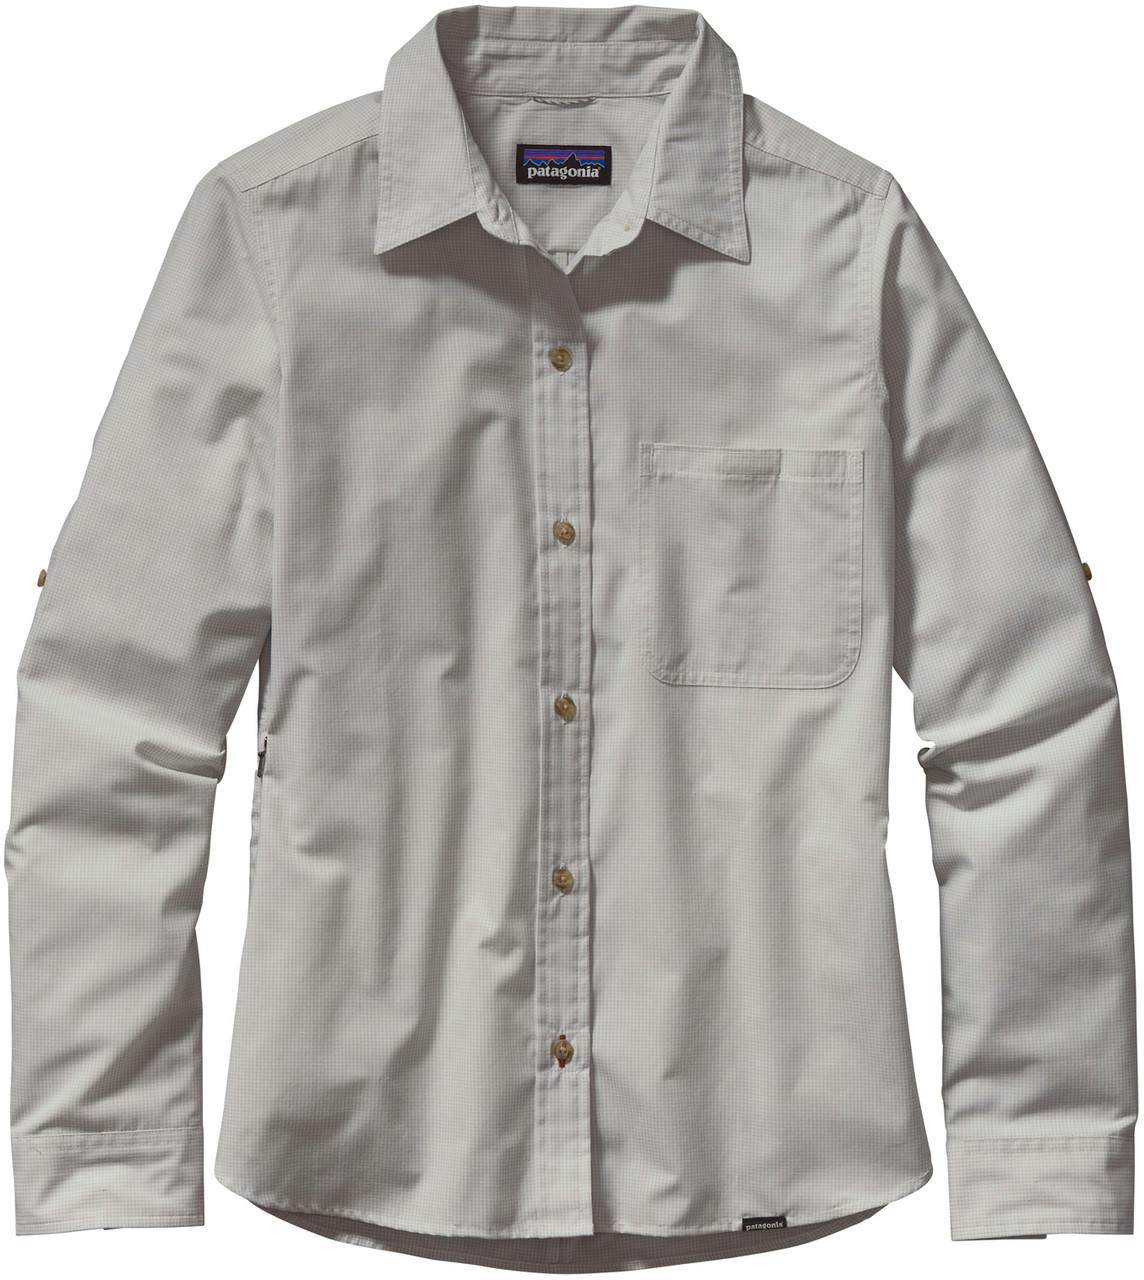 Island Hopper II Long Sleeve Shirt Dusty/Tailored Grey